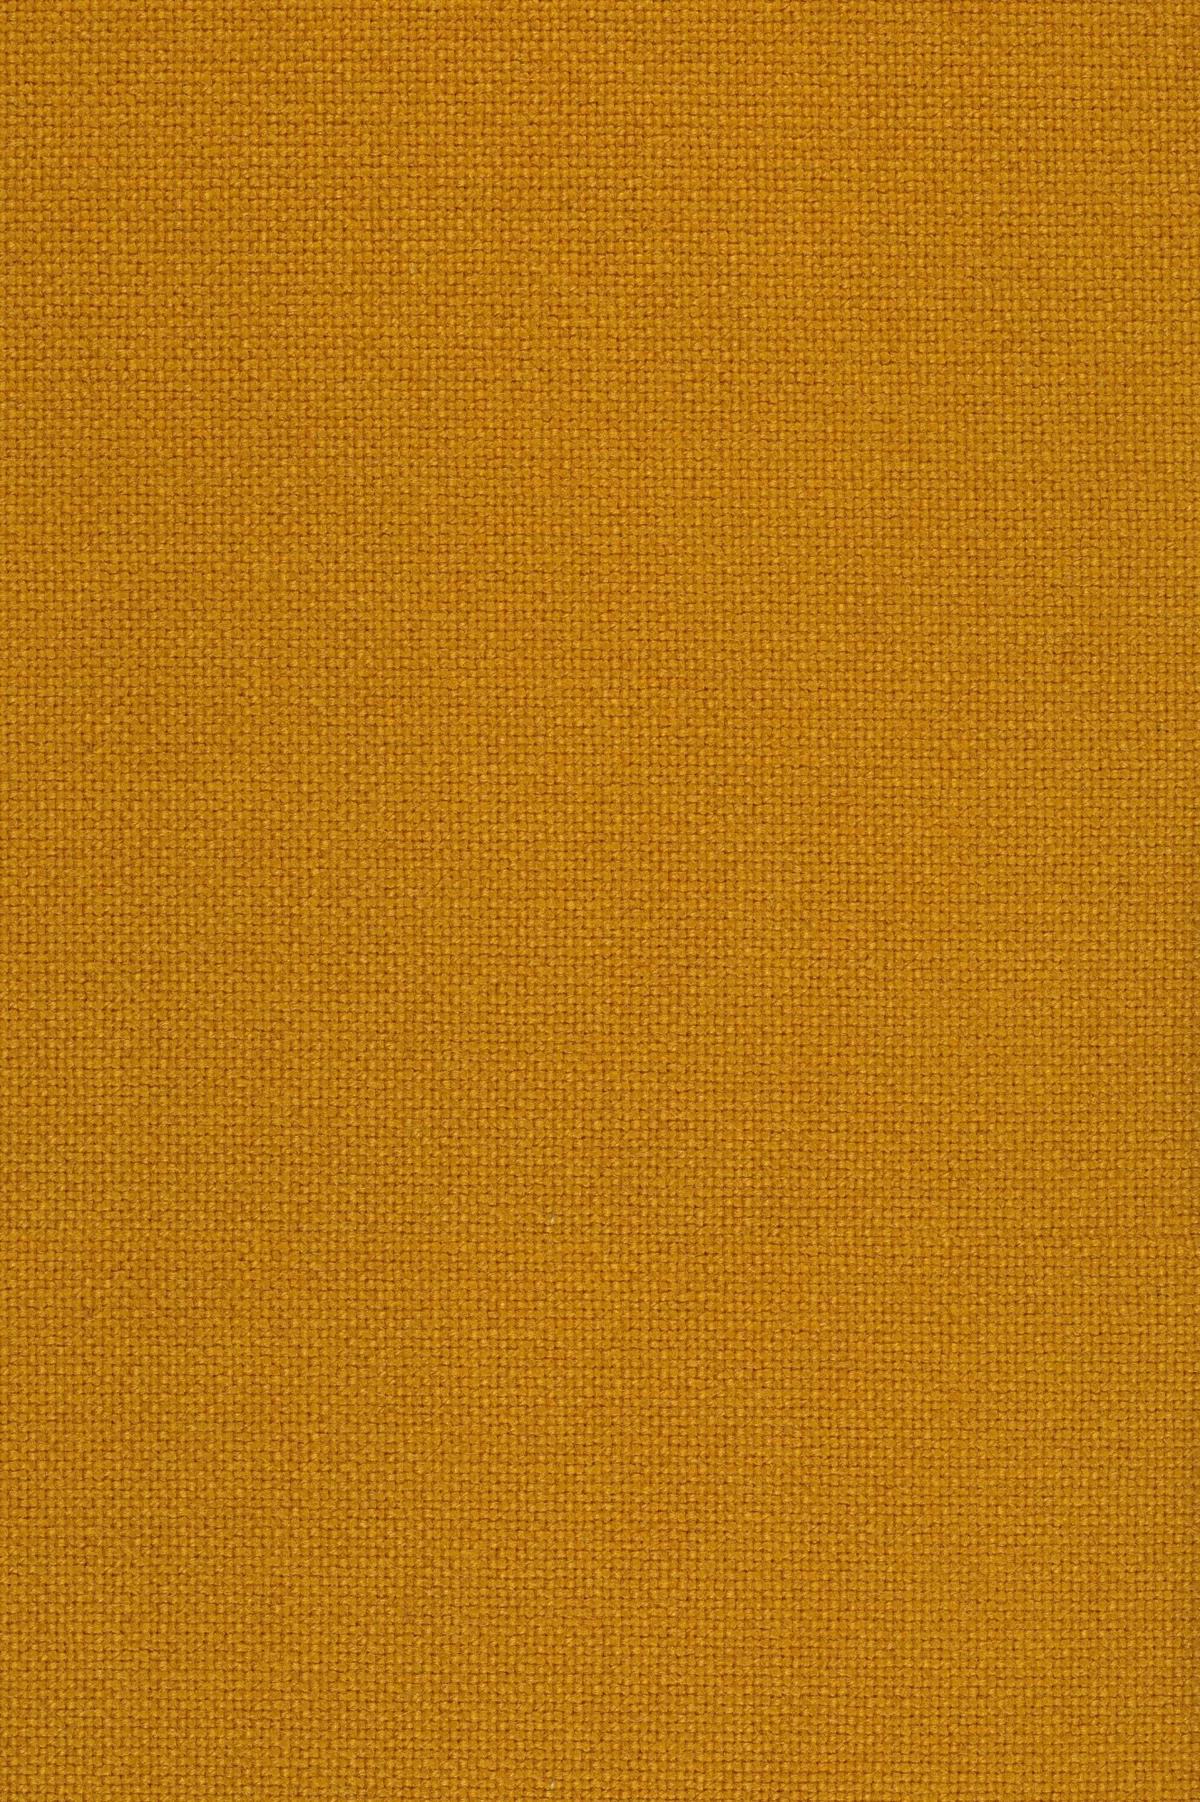 Fabric sample Hallingdal 65 547 orange